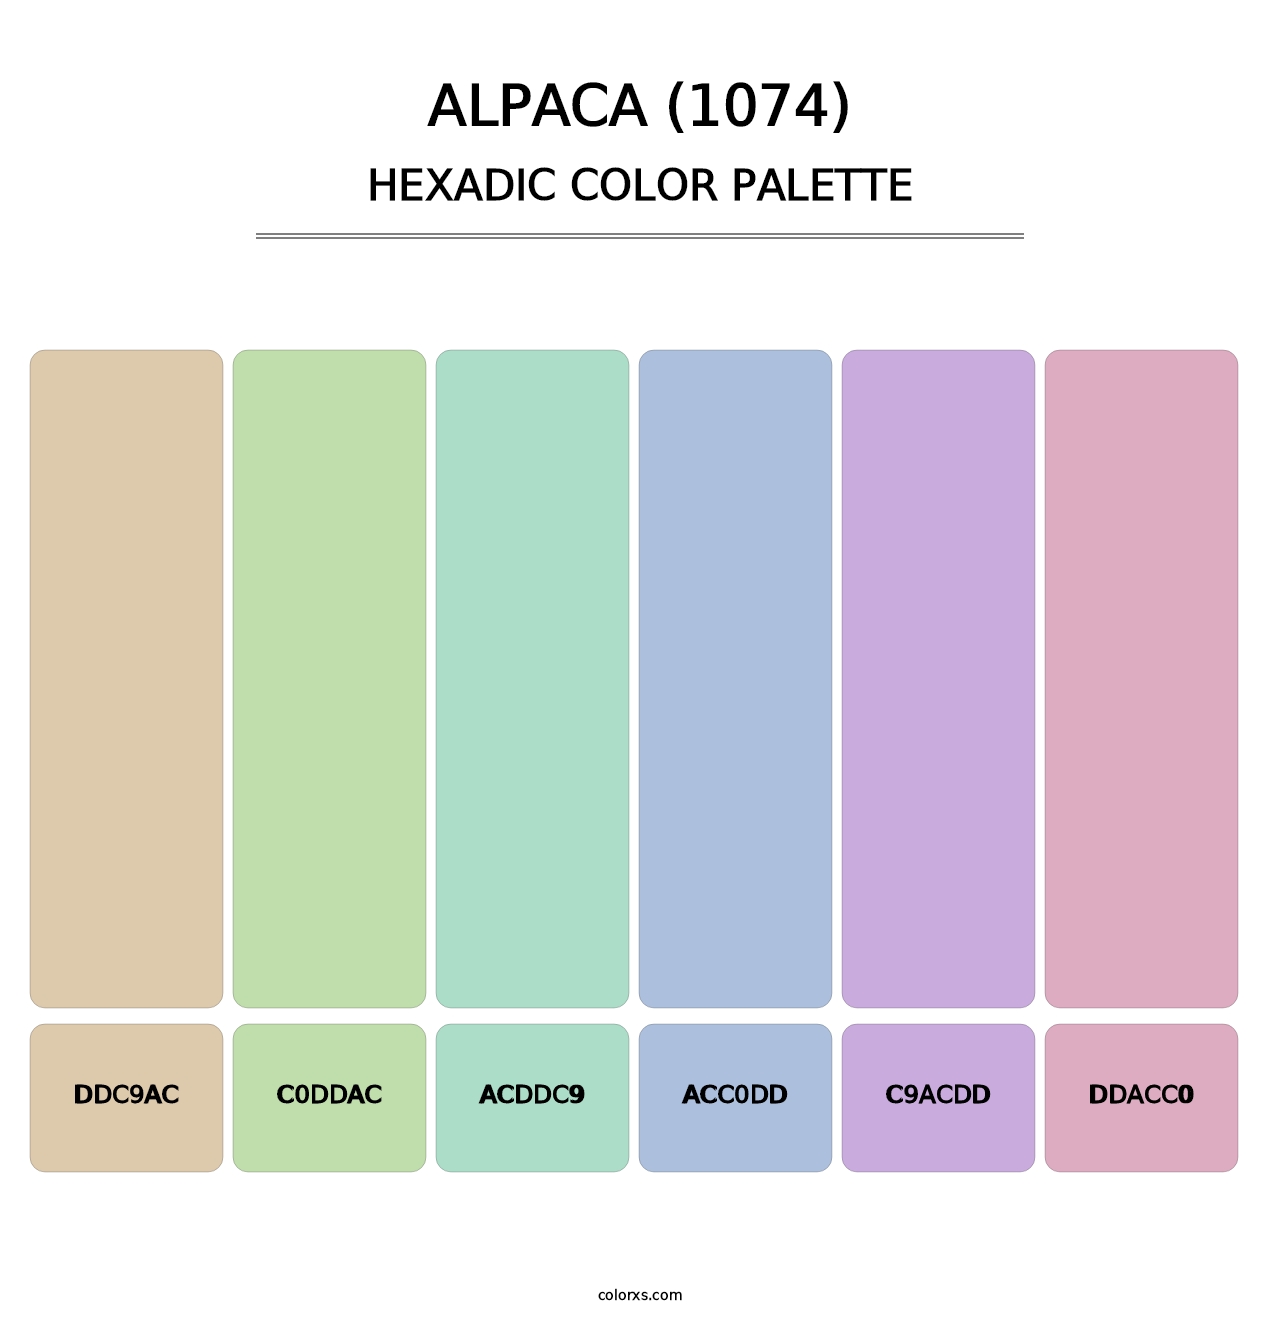 Alpaca (1074) - Hexadic Color Palette